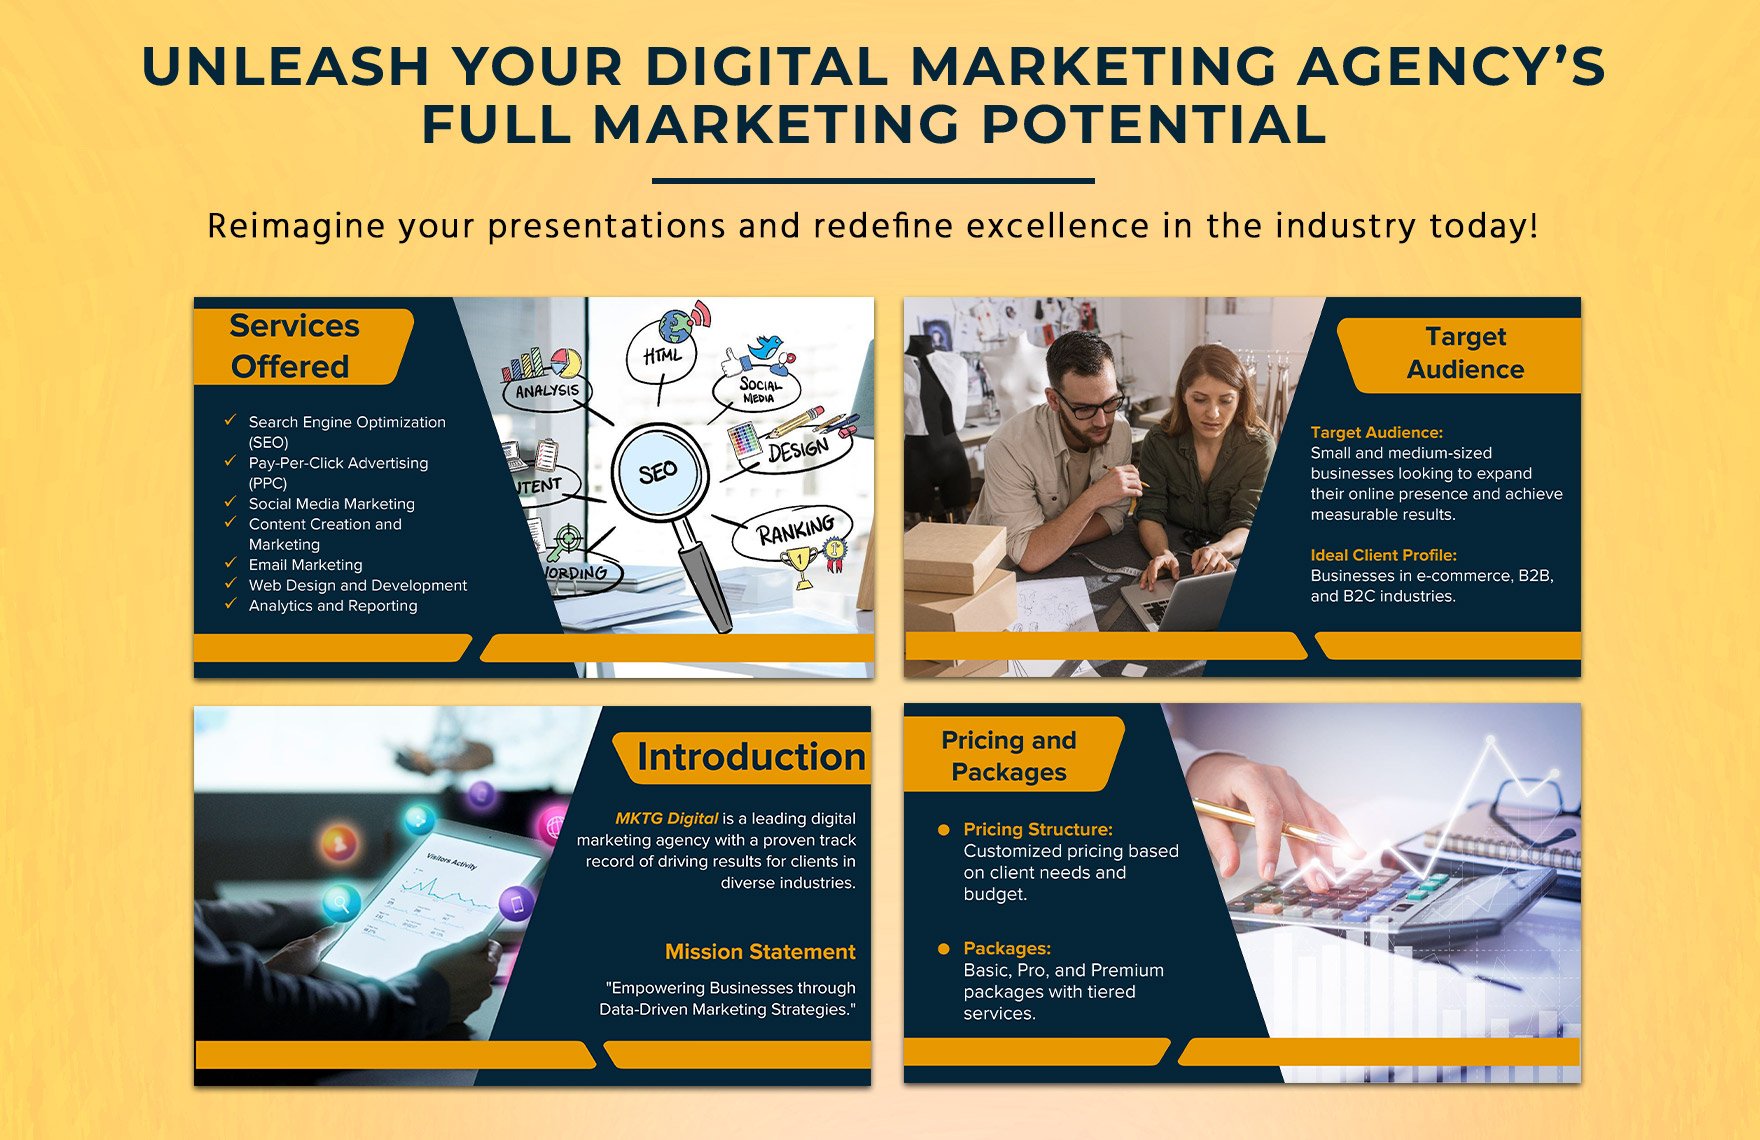 Digital Marketing Agency Pitch Deck Template